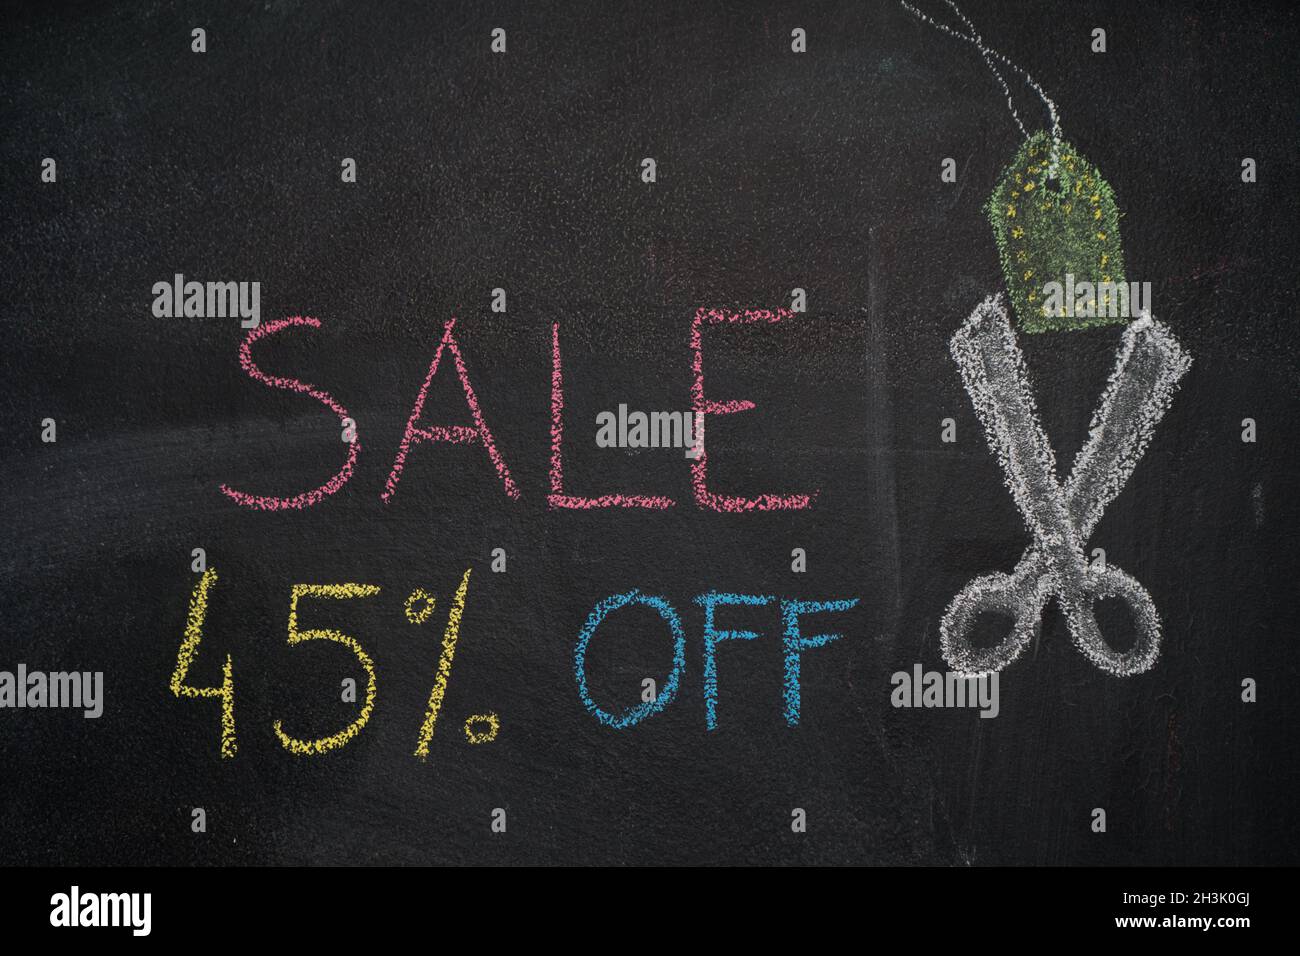 Sale 45% off on chalkboard Stock Photo